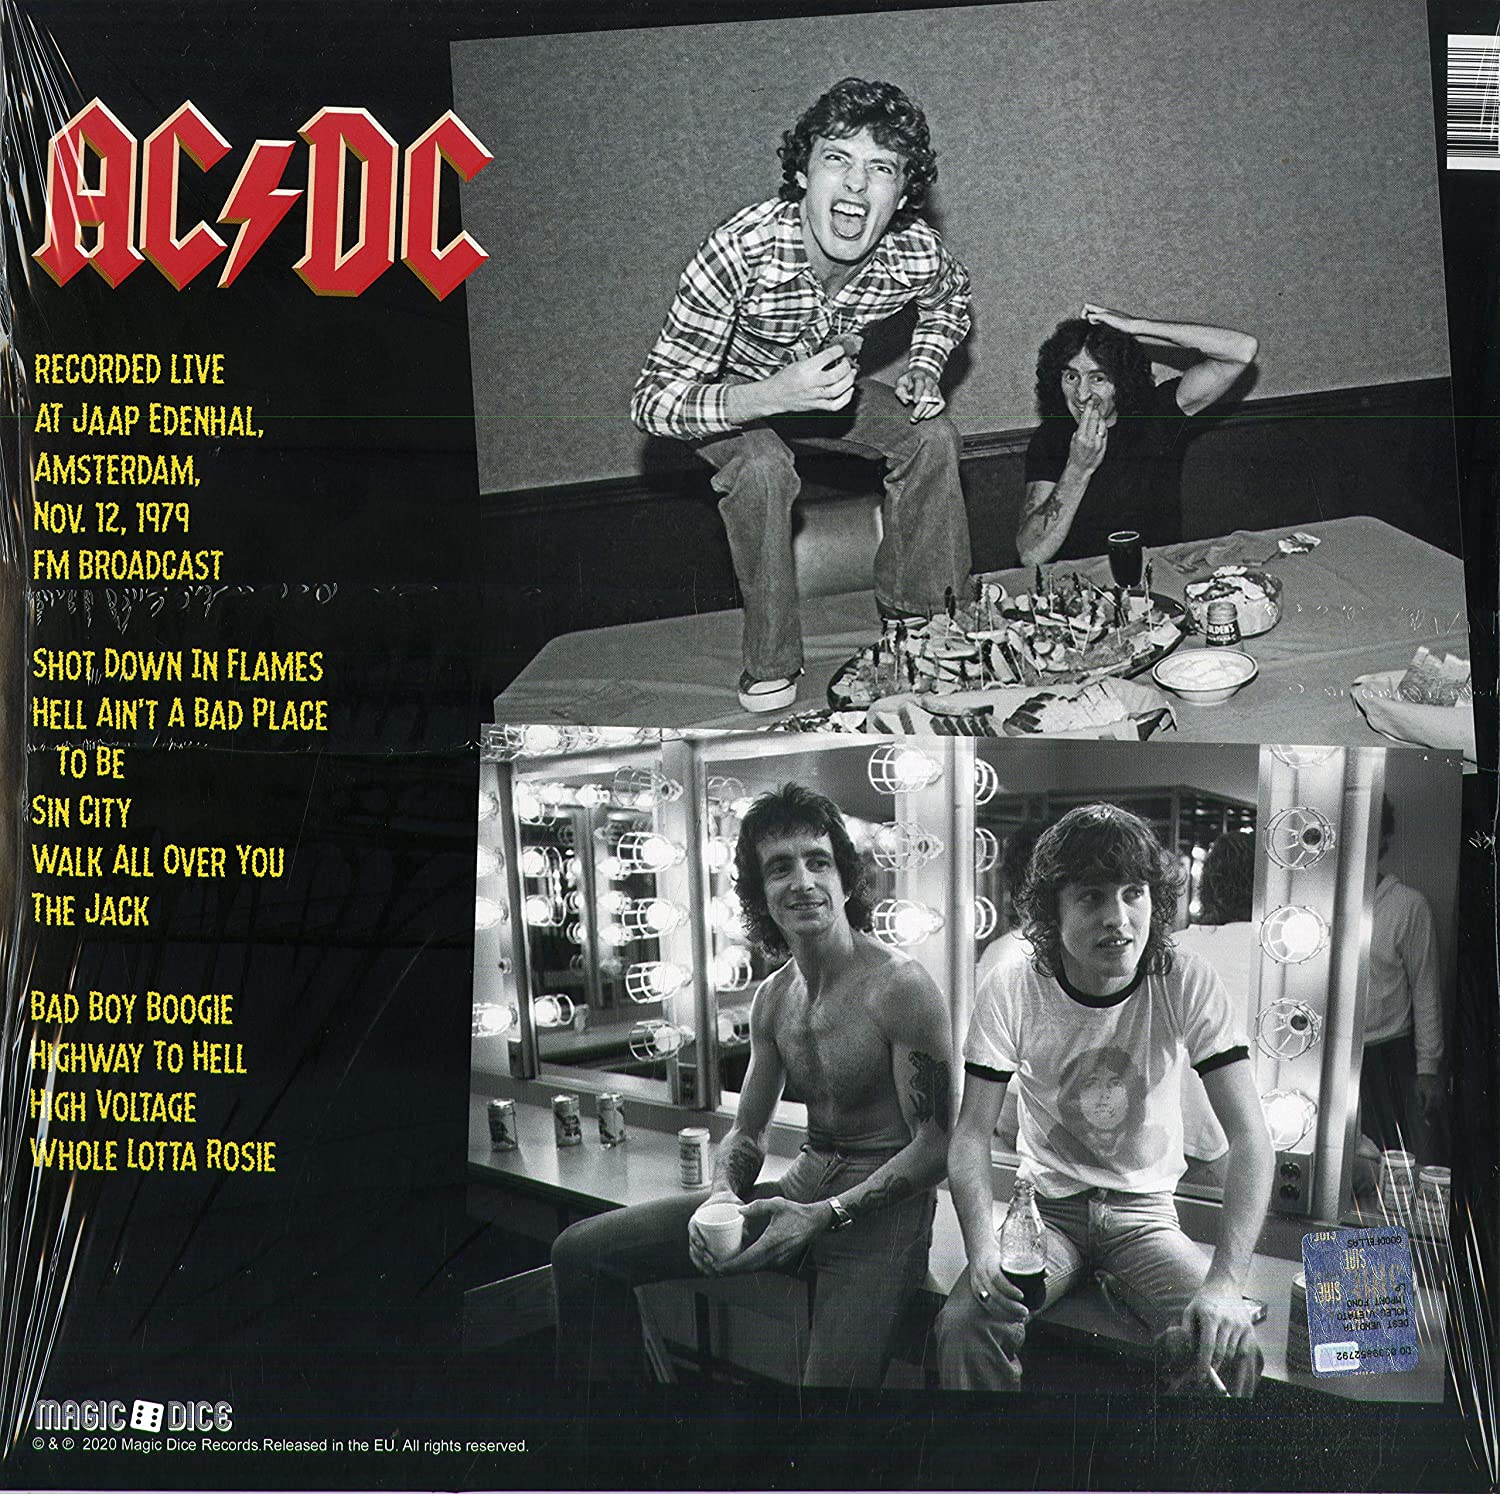 AC/DC (에이씨디씨) - No Stop Signs [LP] 